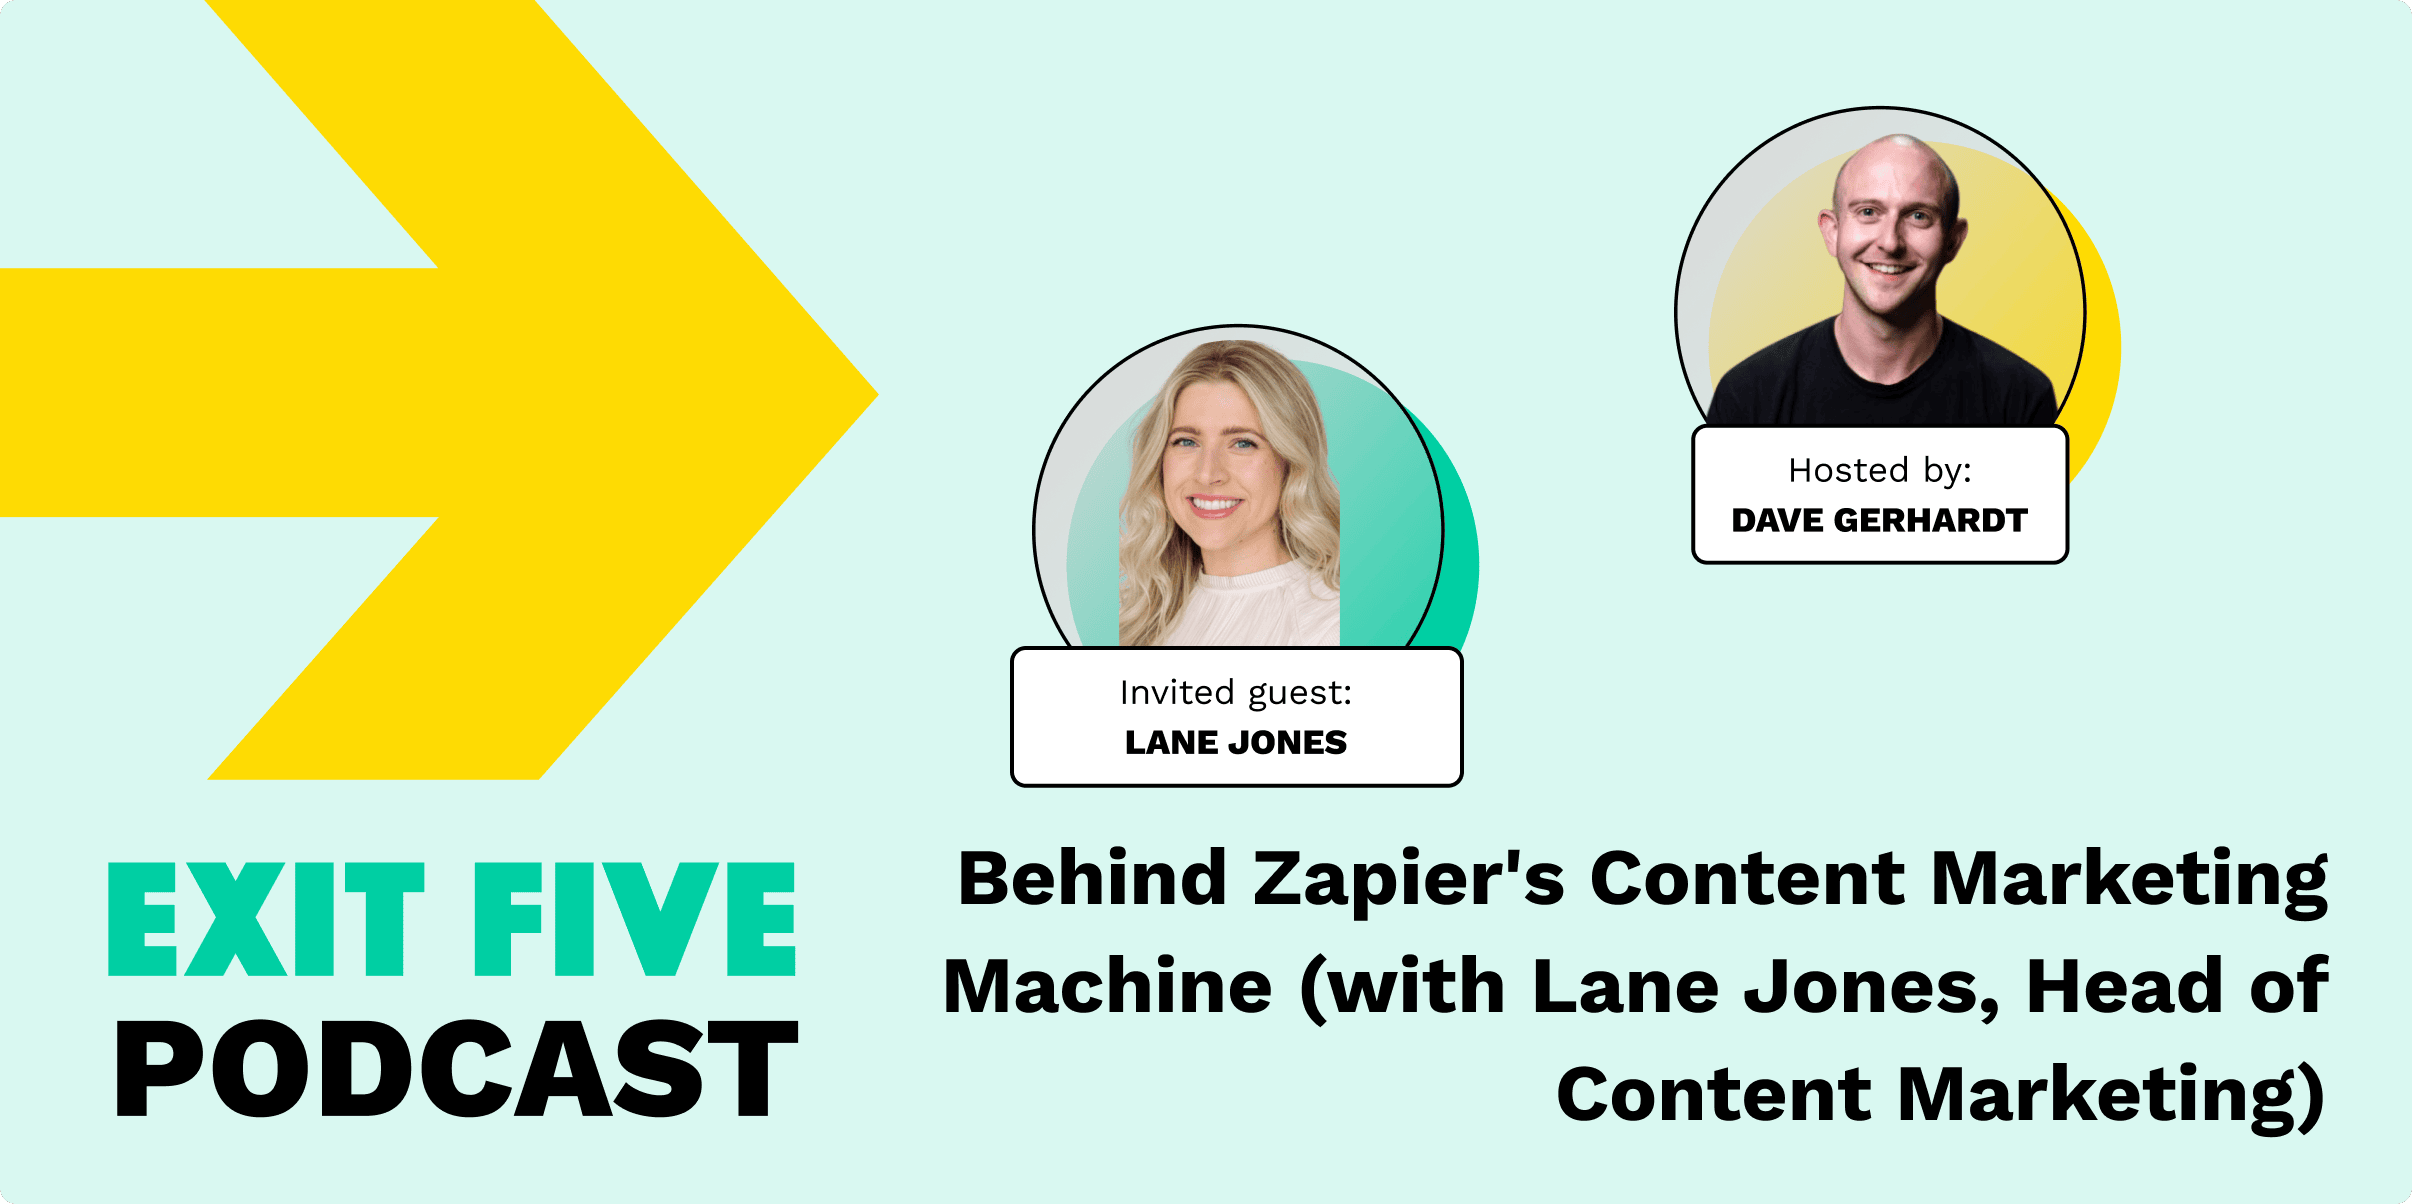 Behind Zapier's Content Marketing Machine (with Lane Jones, Head of Content Marketing)